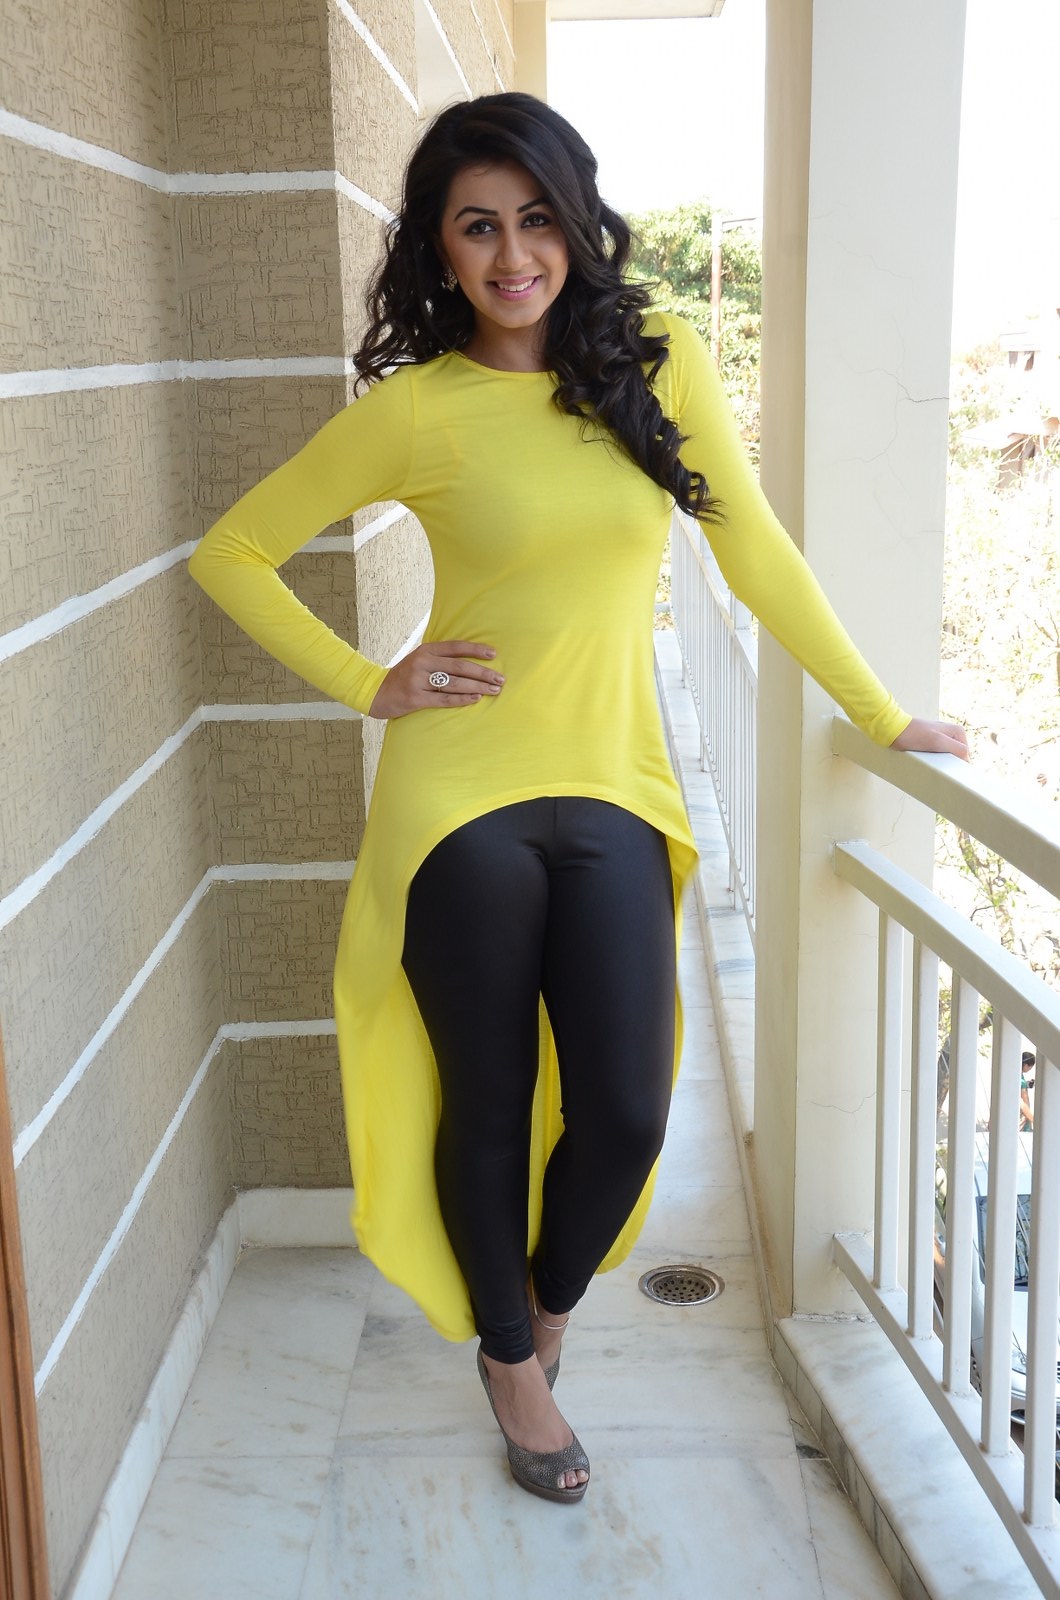 Nikki Galrani In A Tight Yellow Tops And Black Leggings